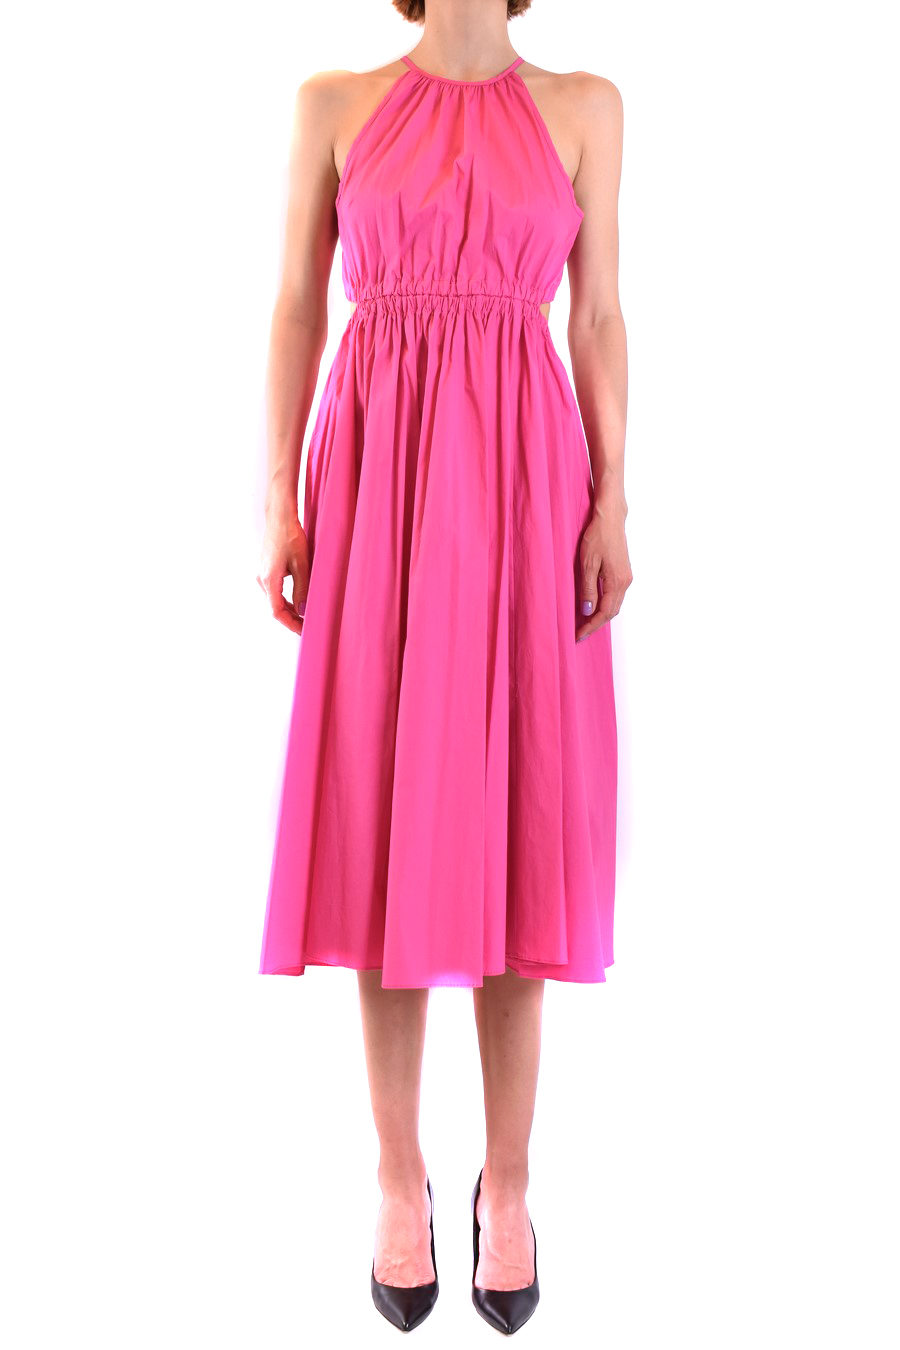 Michael Kors dress Pink  eBay